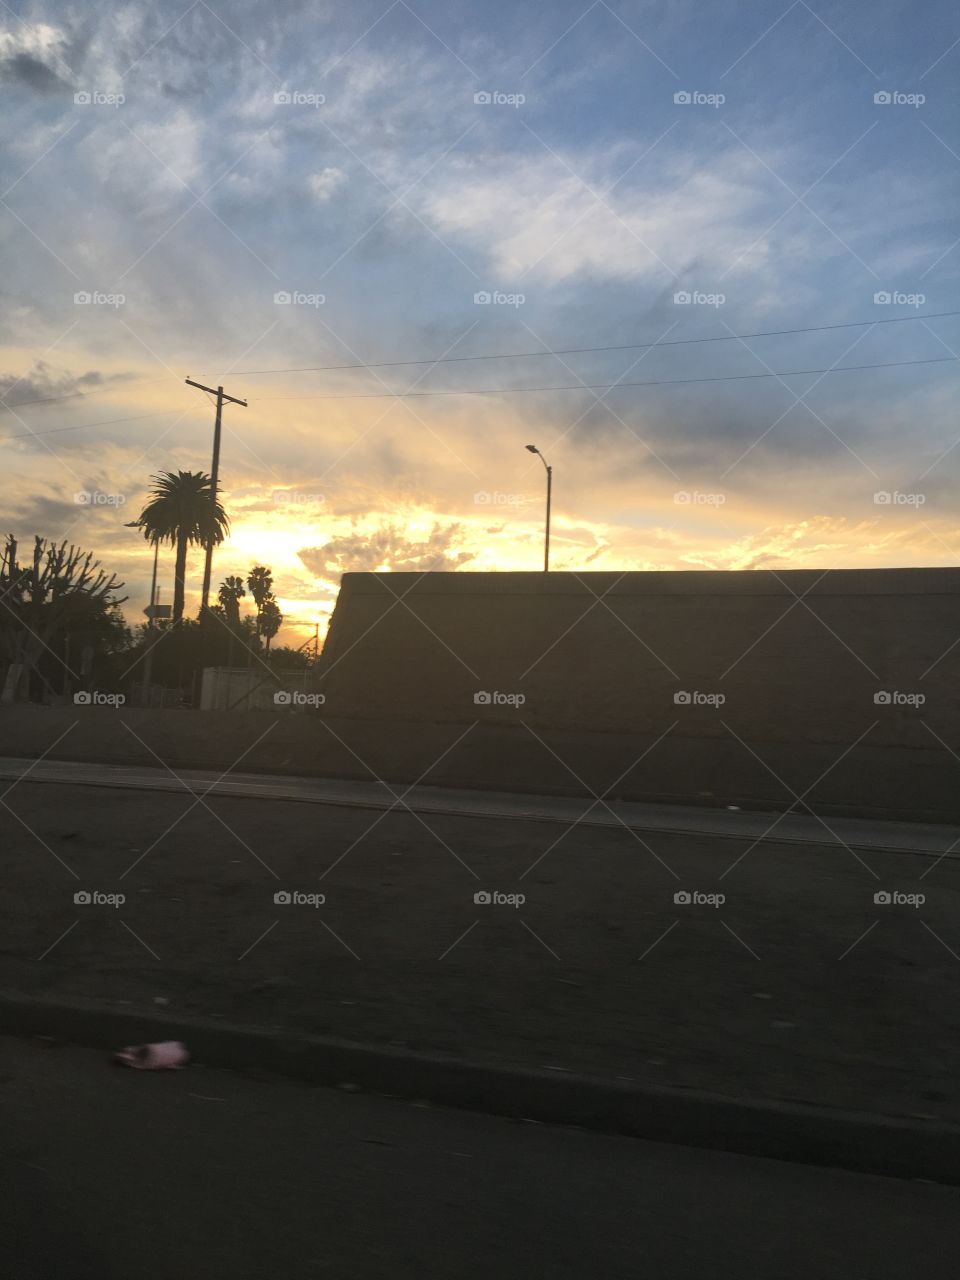 Sunset on the freeway 